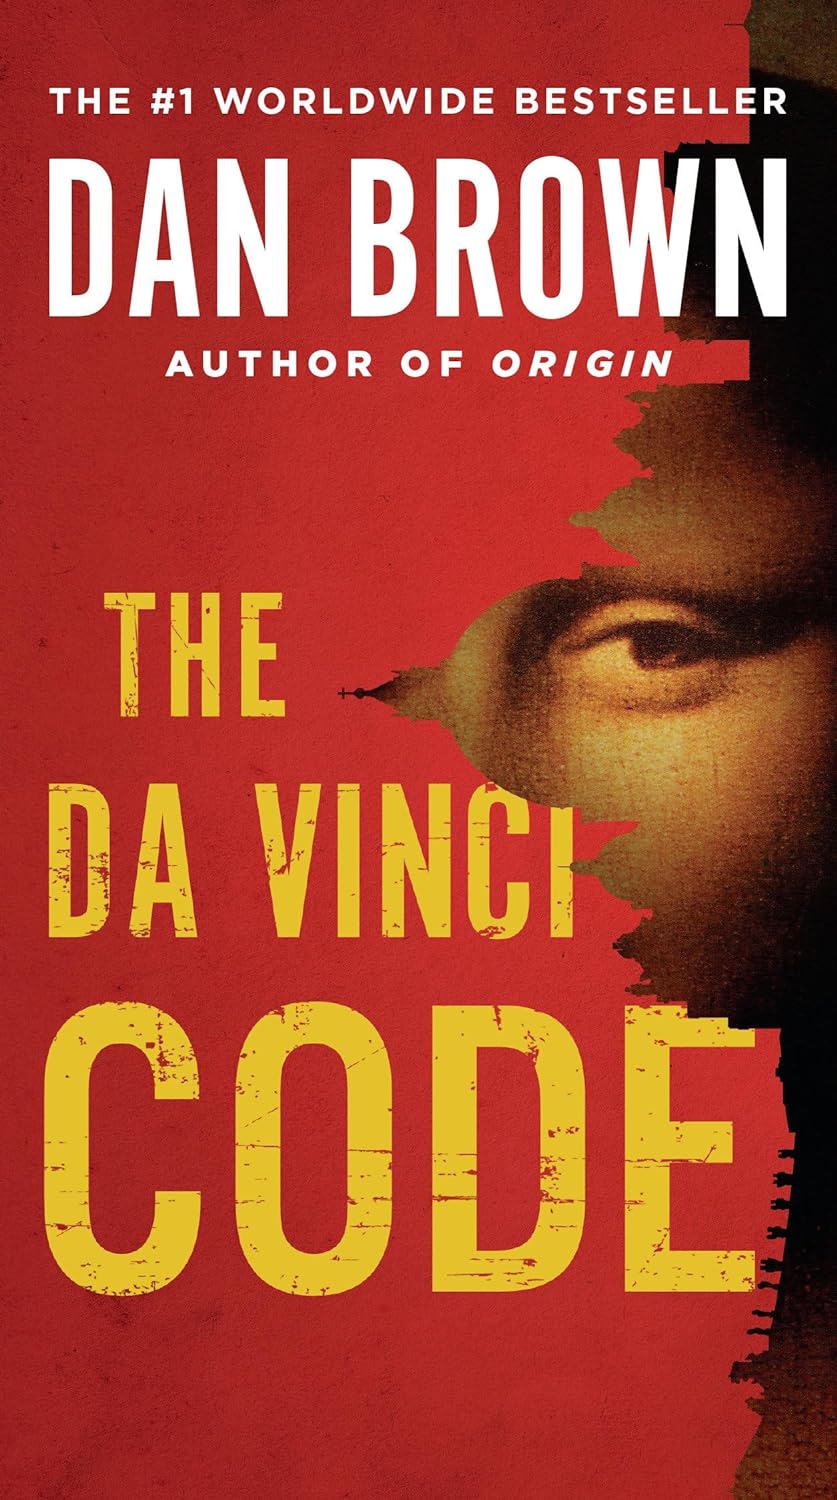 The Davinci Code by Dan Brown